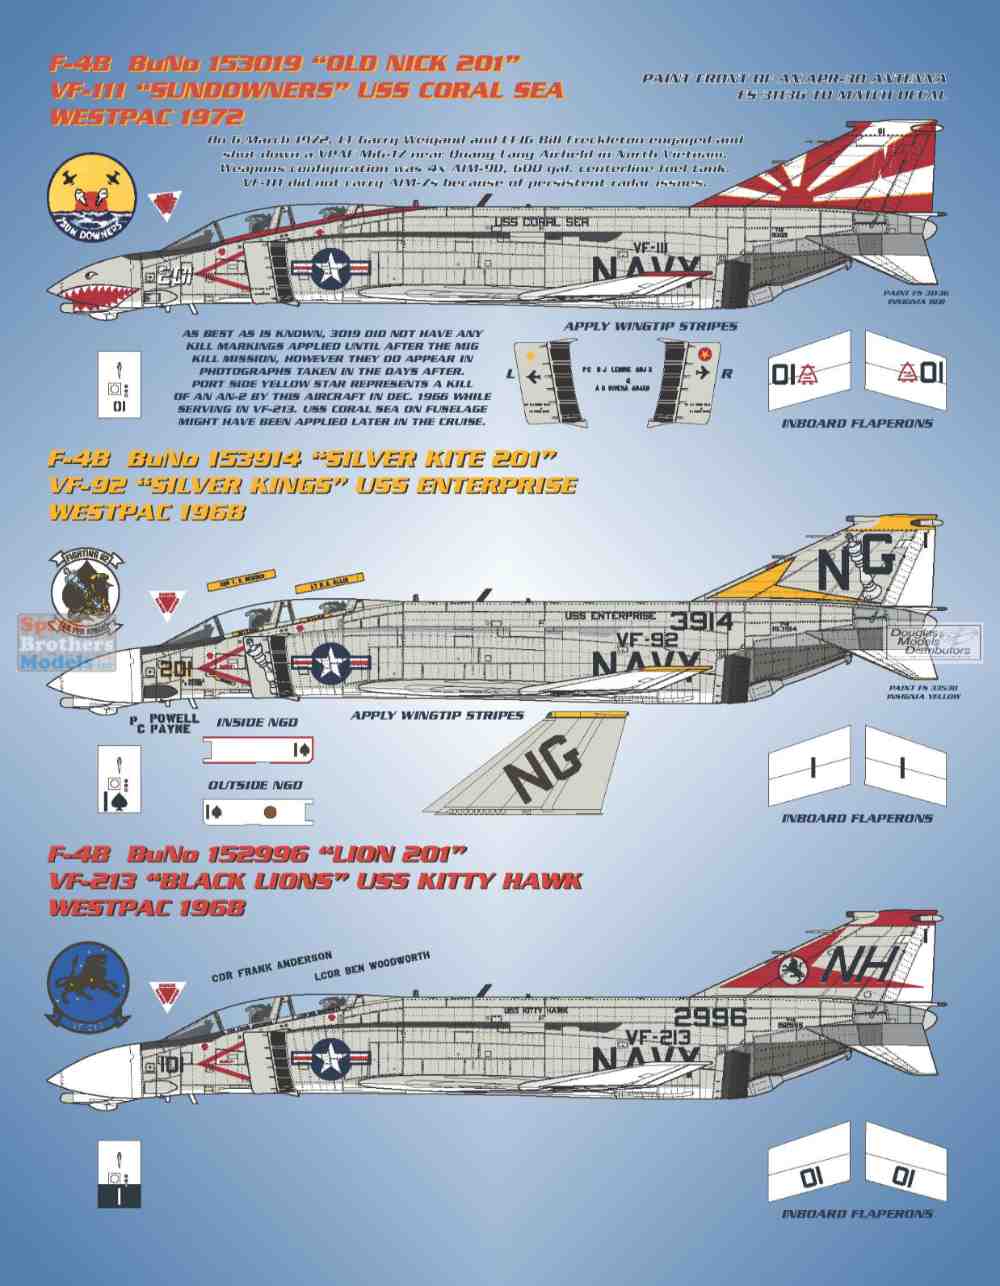 1/48 Bullseye Decals #48-017 F-4B Phantom II Fleet Phantoms Pt.1 